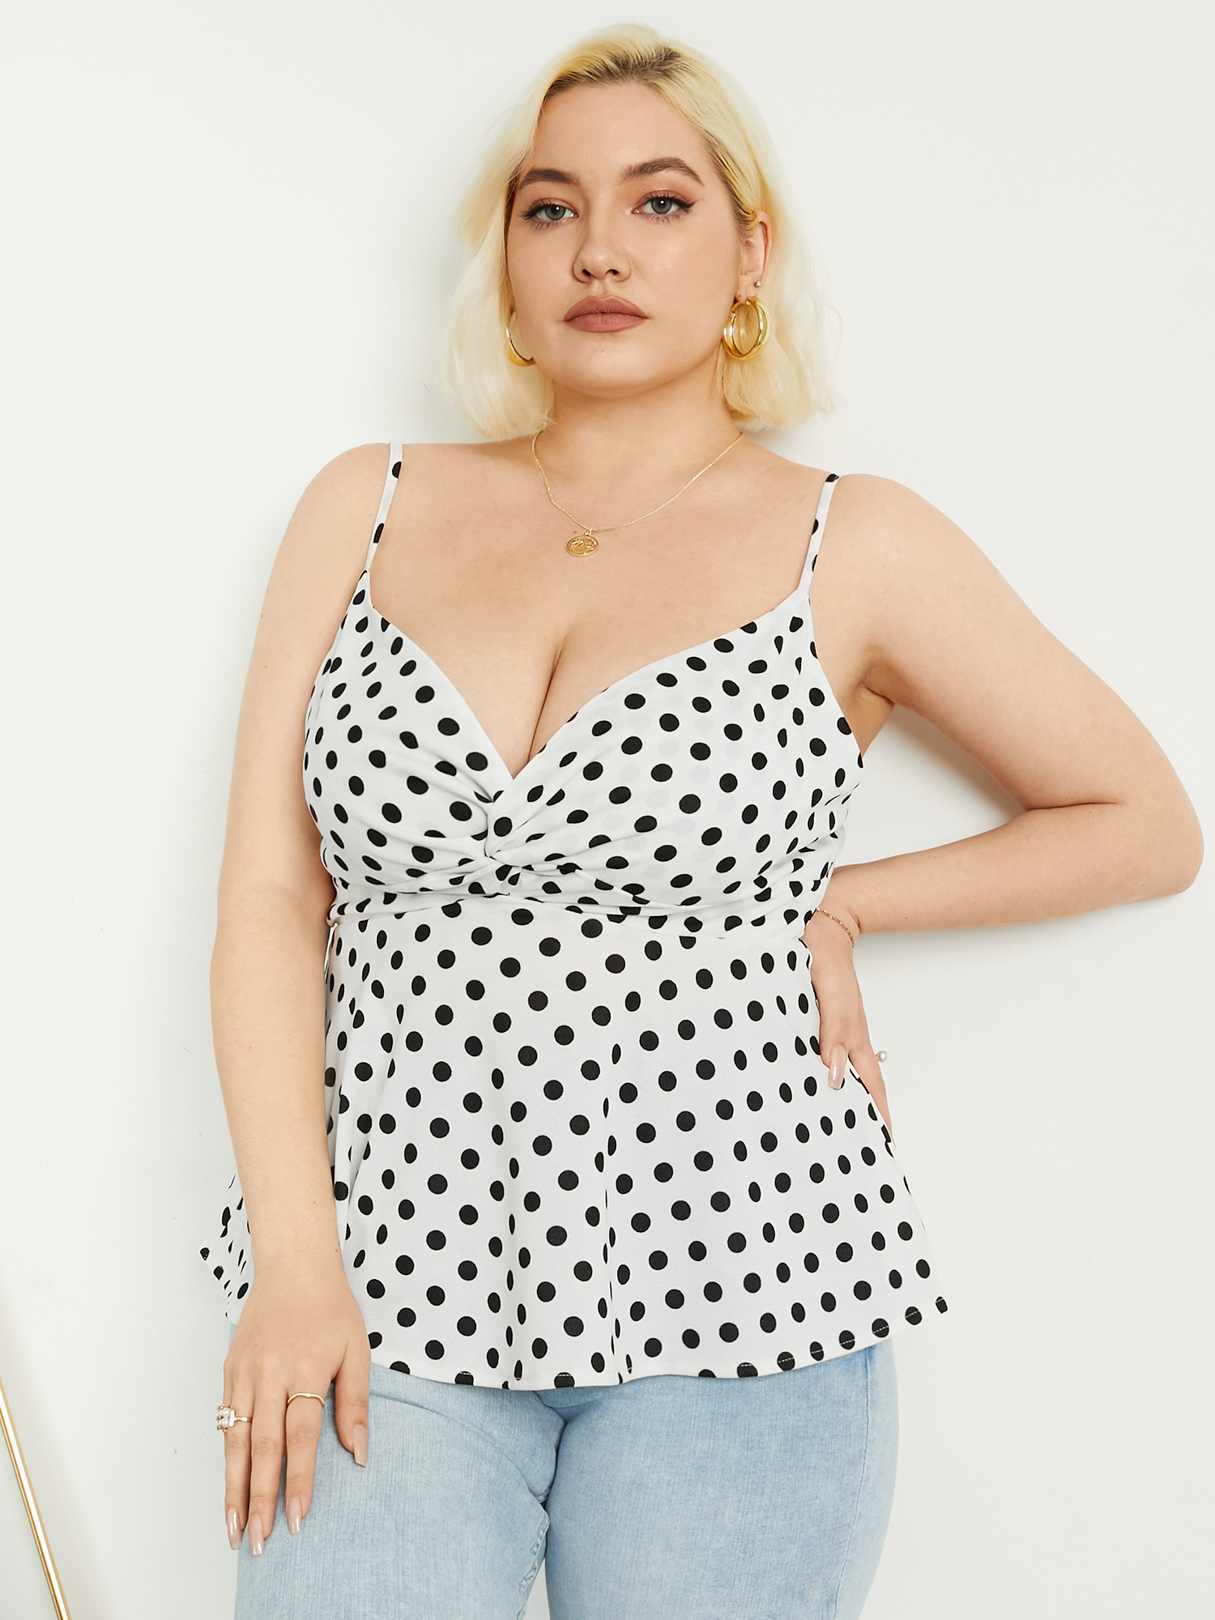 Aovica 2023 Plus Size Summer Women Blouses Tops Sleeveless Tanks Camis Polka Dots  Club Party Beach Tees Tunic Shirt